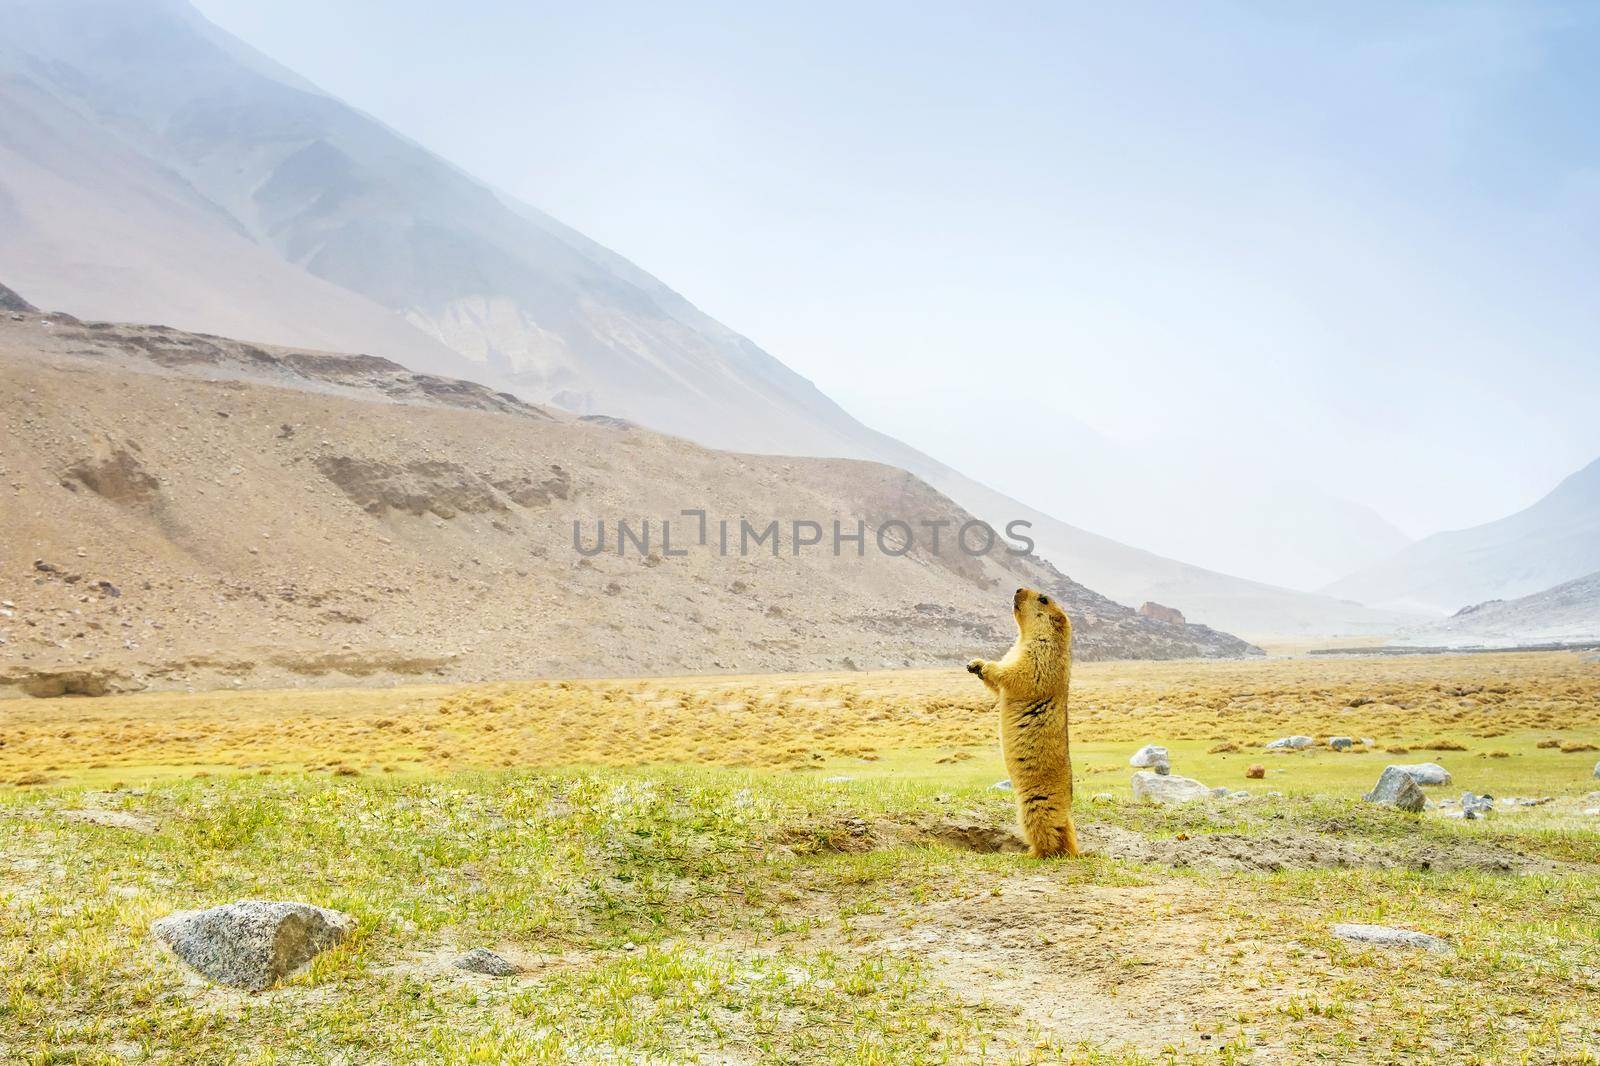 Himalayan marmot wild animal at Leah Ladakh,India by Nuamfolio